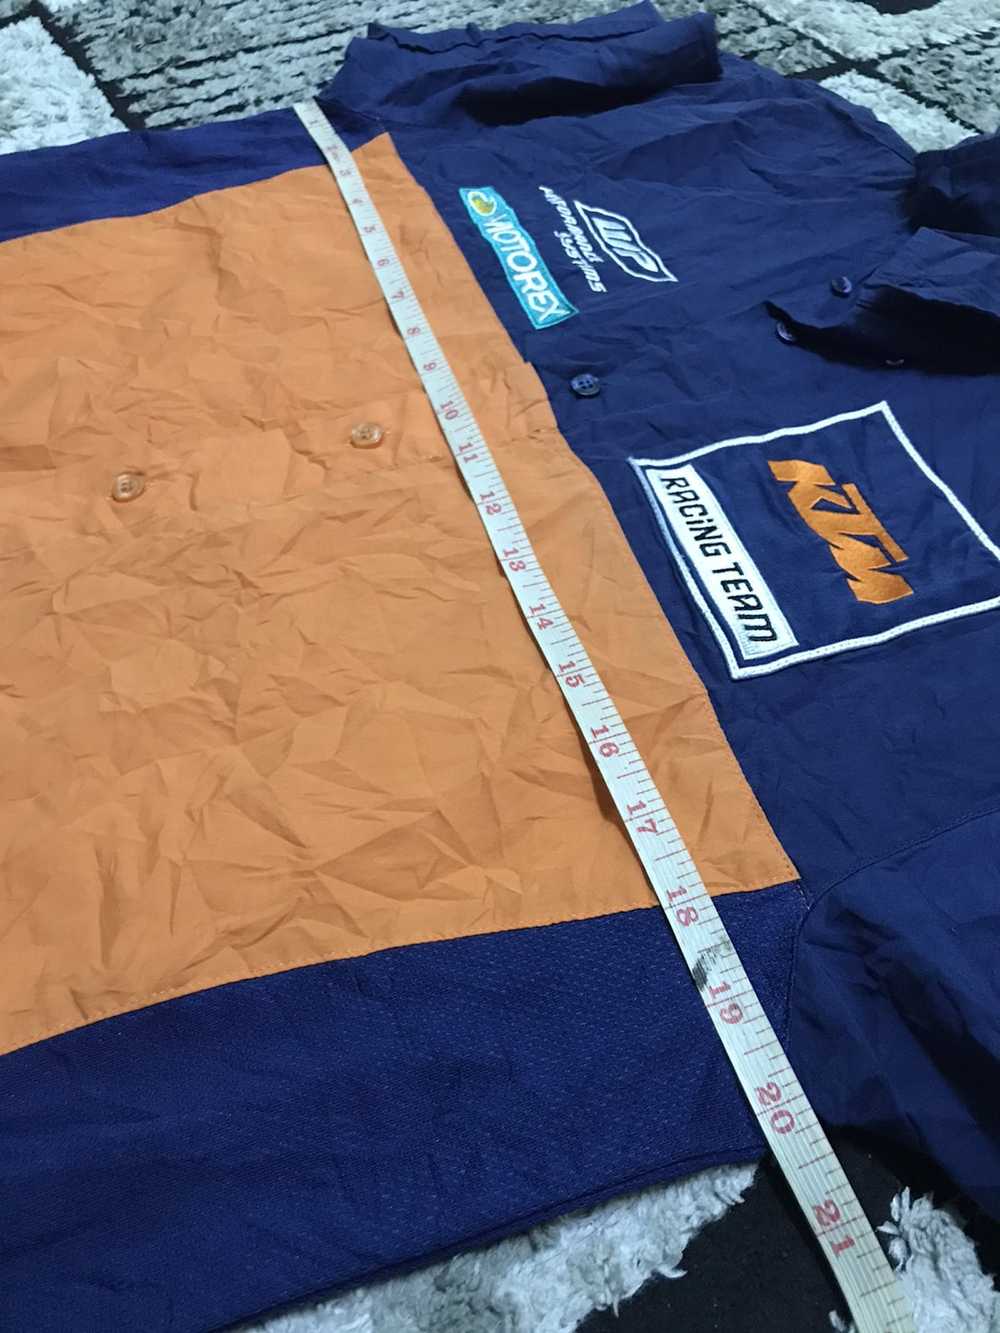 Racing × Sports Specialties KTM racing team shirts - image 6